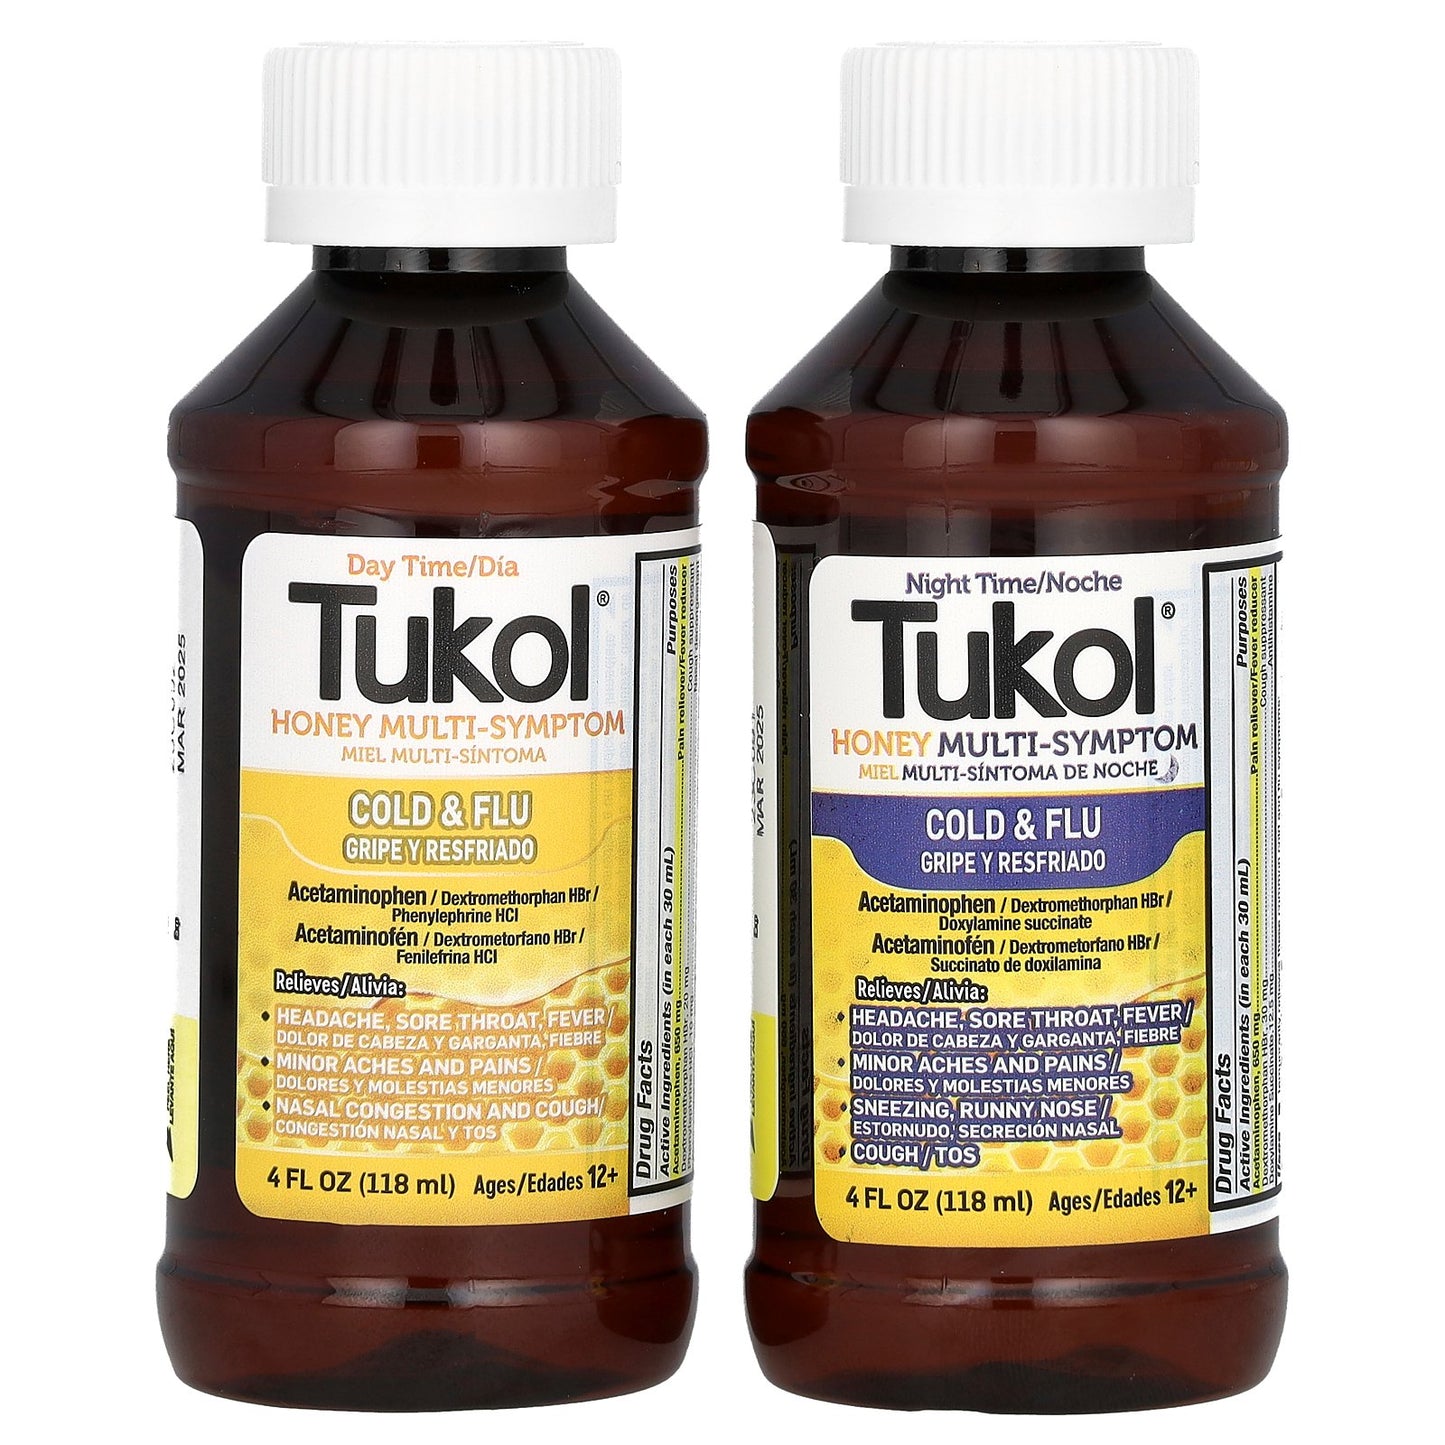 Tukol, Honey. Multi-Symptom Cold & Flu, Day Time & Night Time Value Pack, Ages 12+, Natural Honey, 2 Pack, 4 fl oz (118 ml) Each